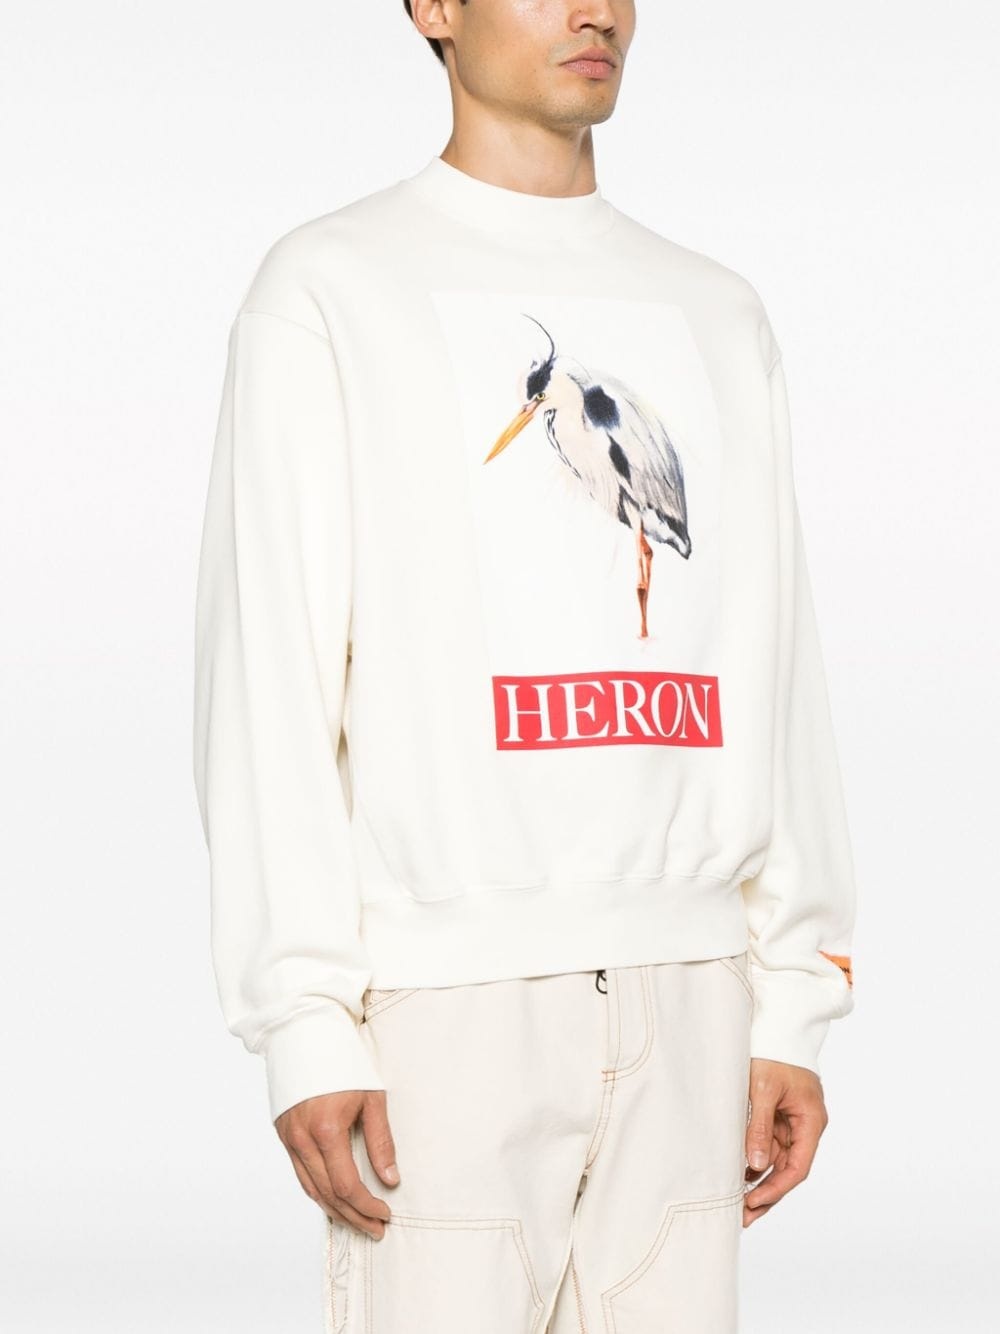 Heron Bird Painted sweatshirt - 3